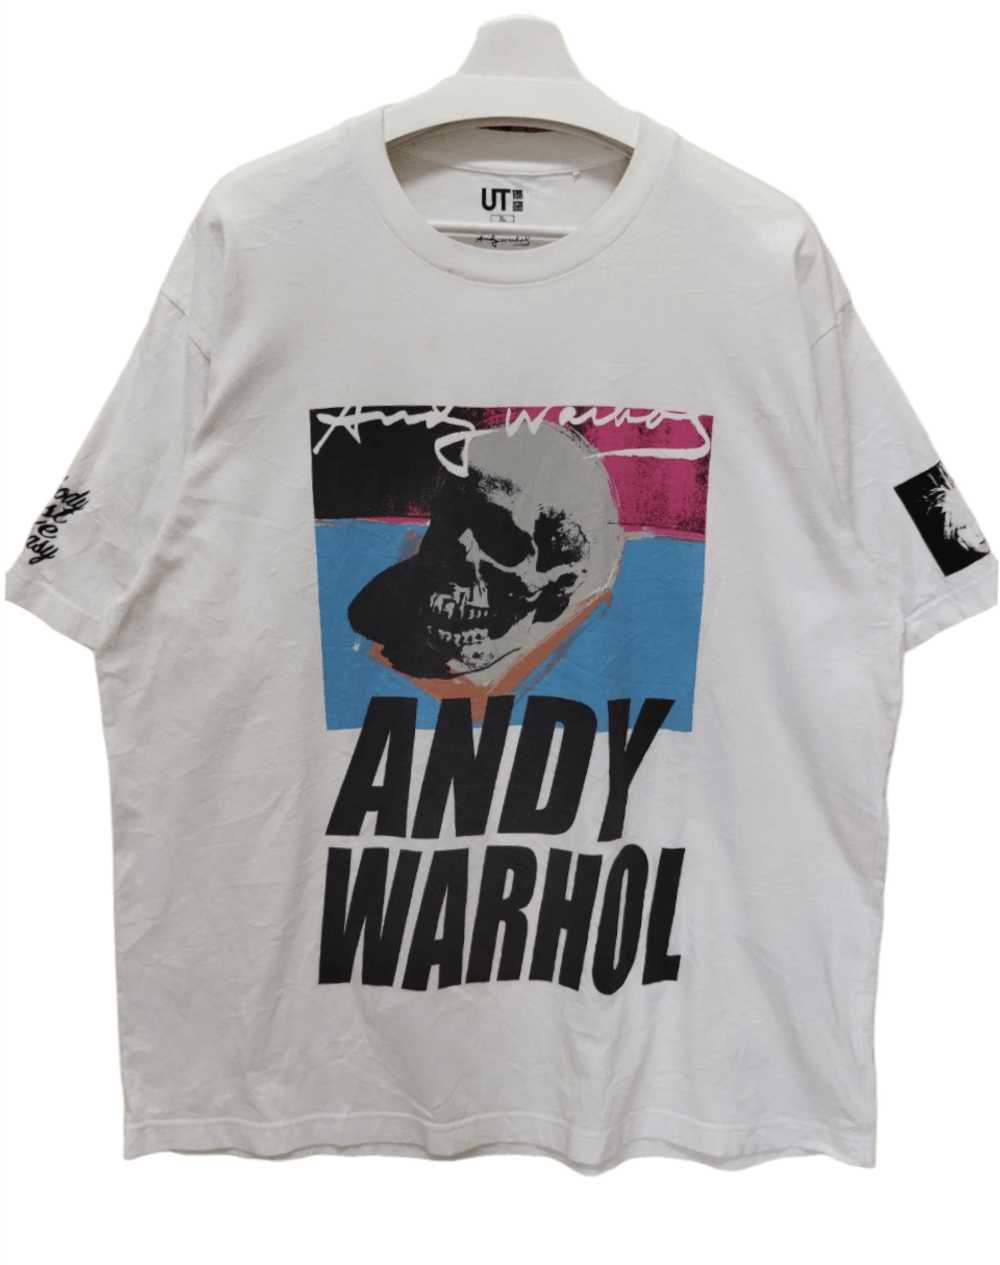 Andy Warhol × Rare × Uniqlo ANDY WARHOL x UNIQLO - image 1